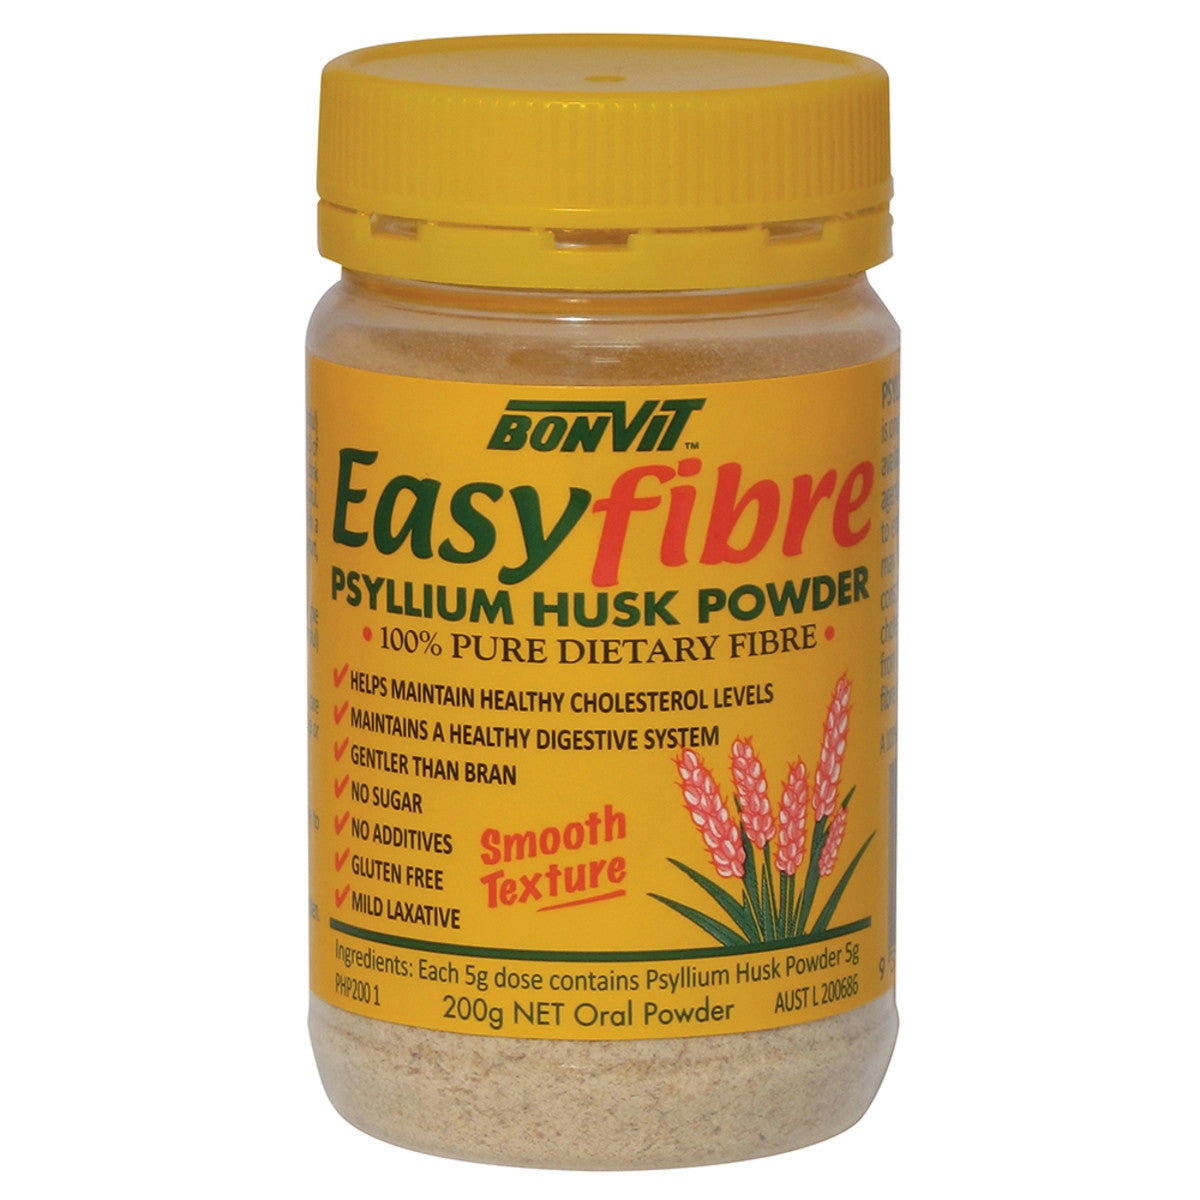 image of Bonvit Easyfibre Psyllium Husk Powder 200g on white background 